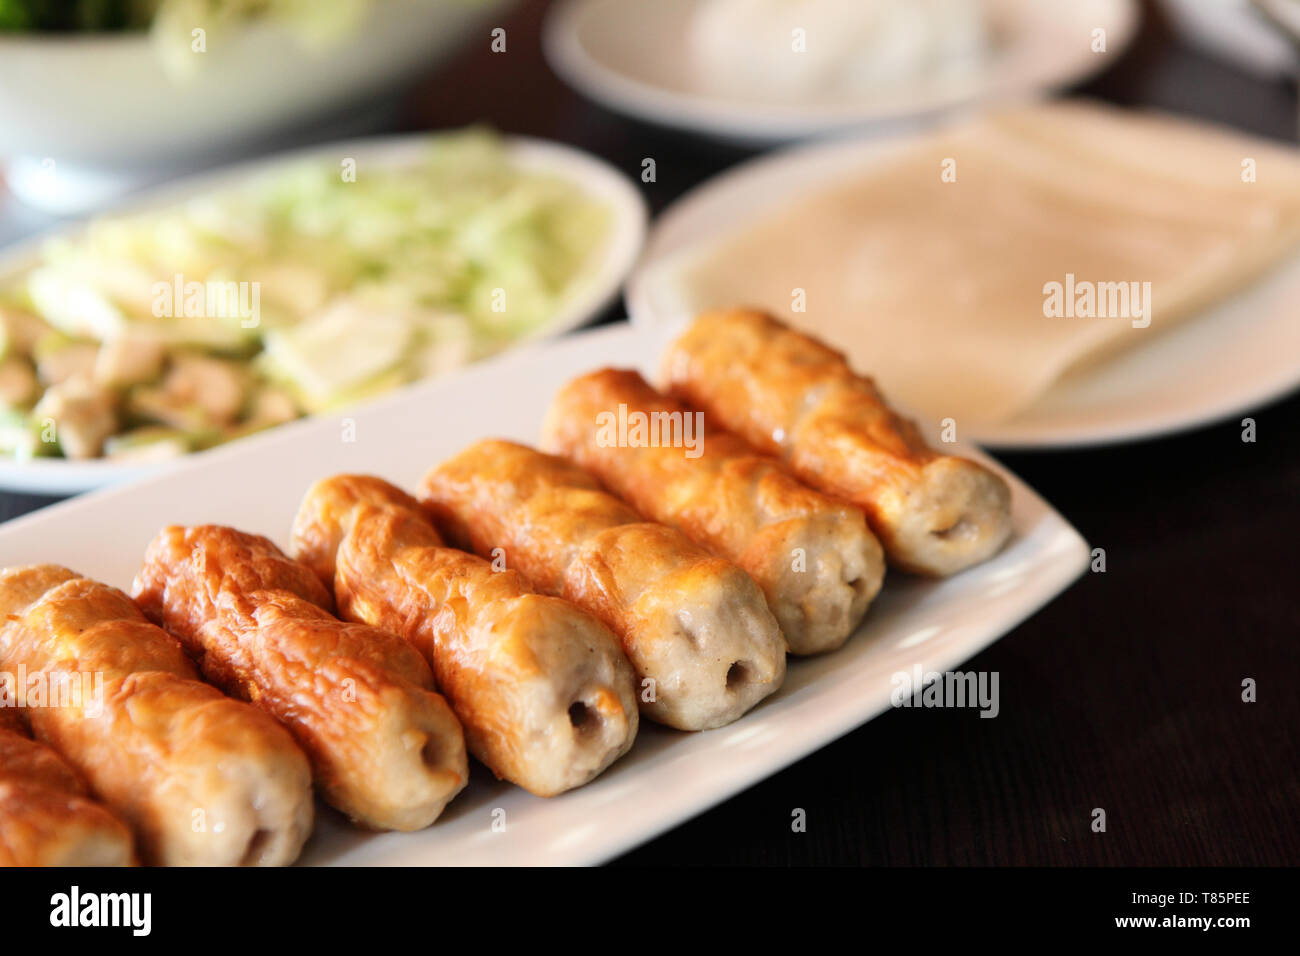 nem nuong vietnamese pork sausage Stock Photo